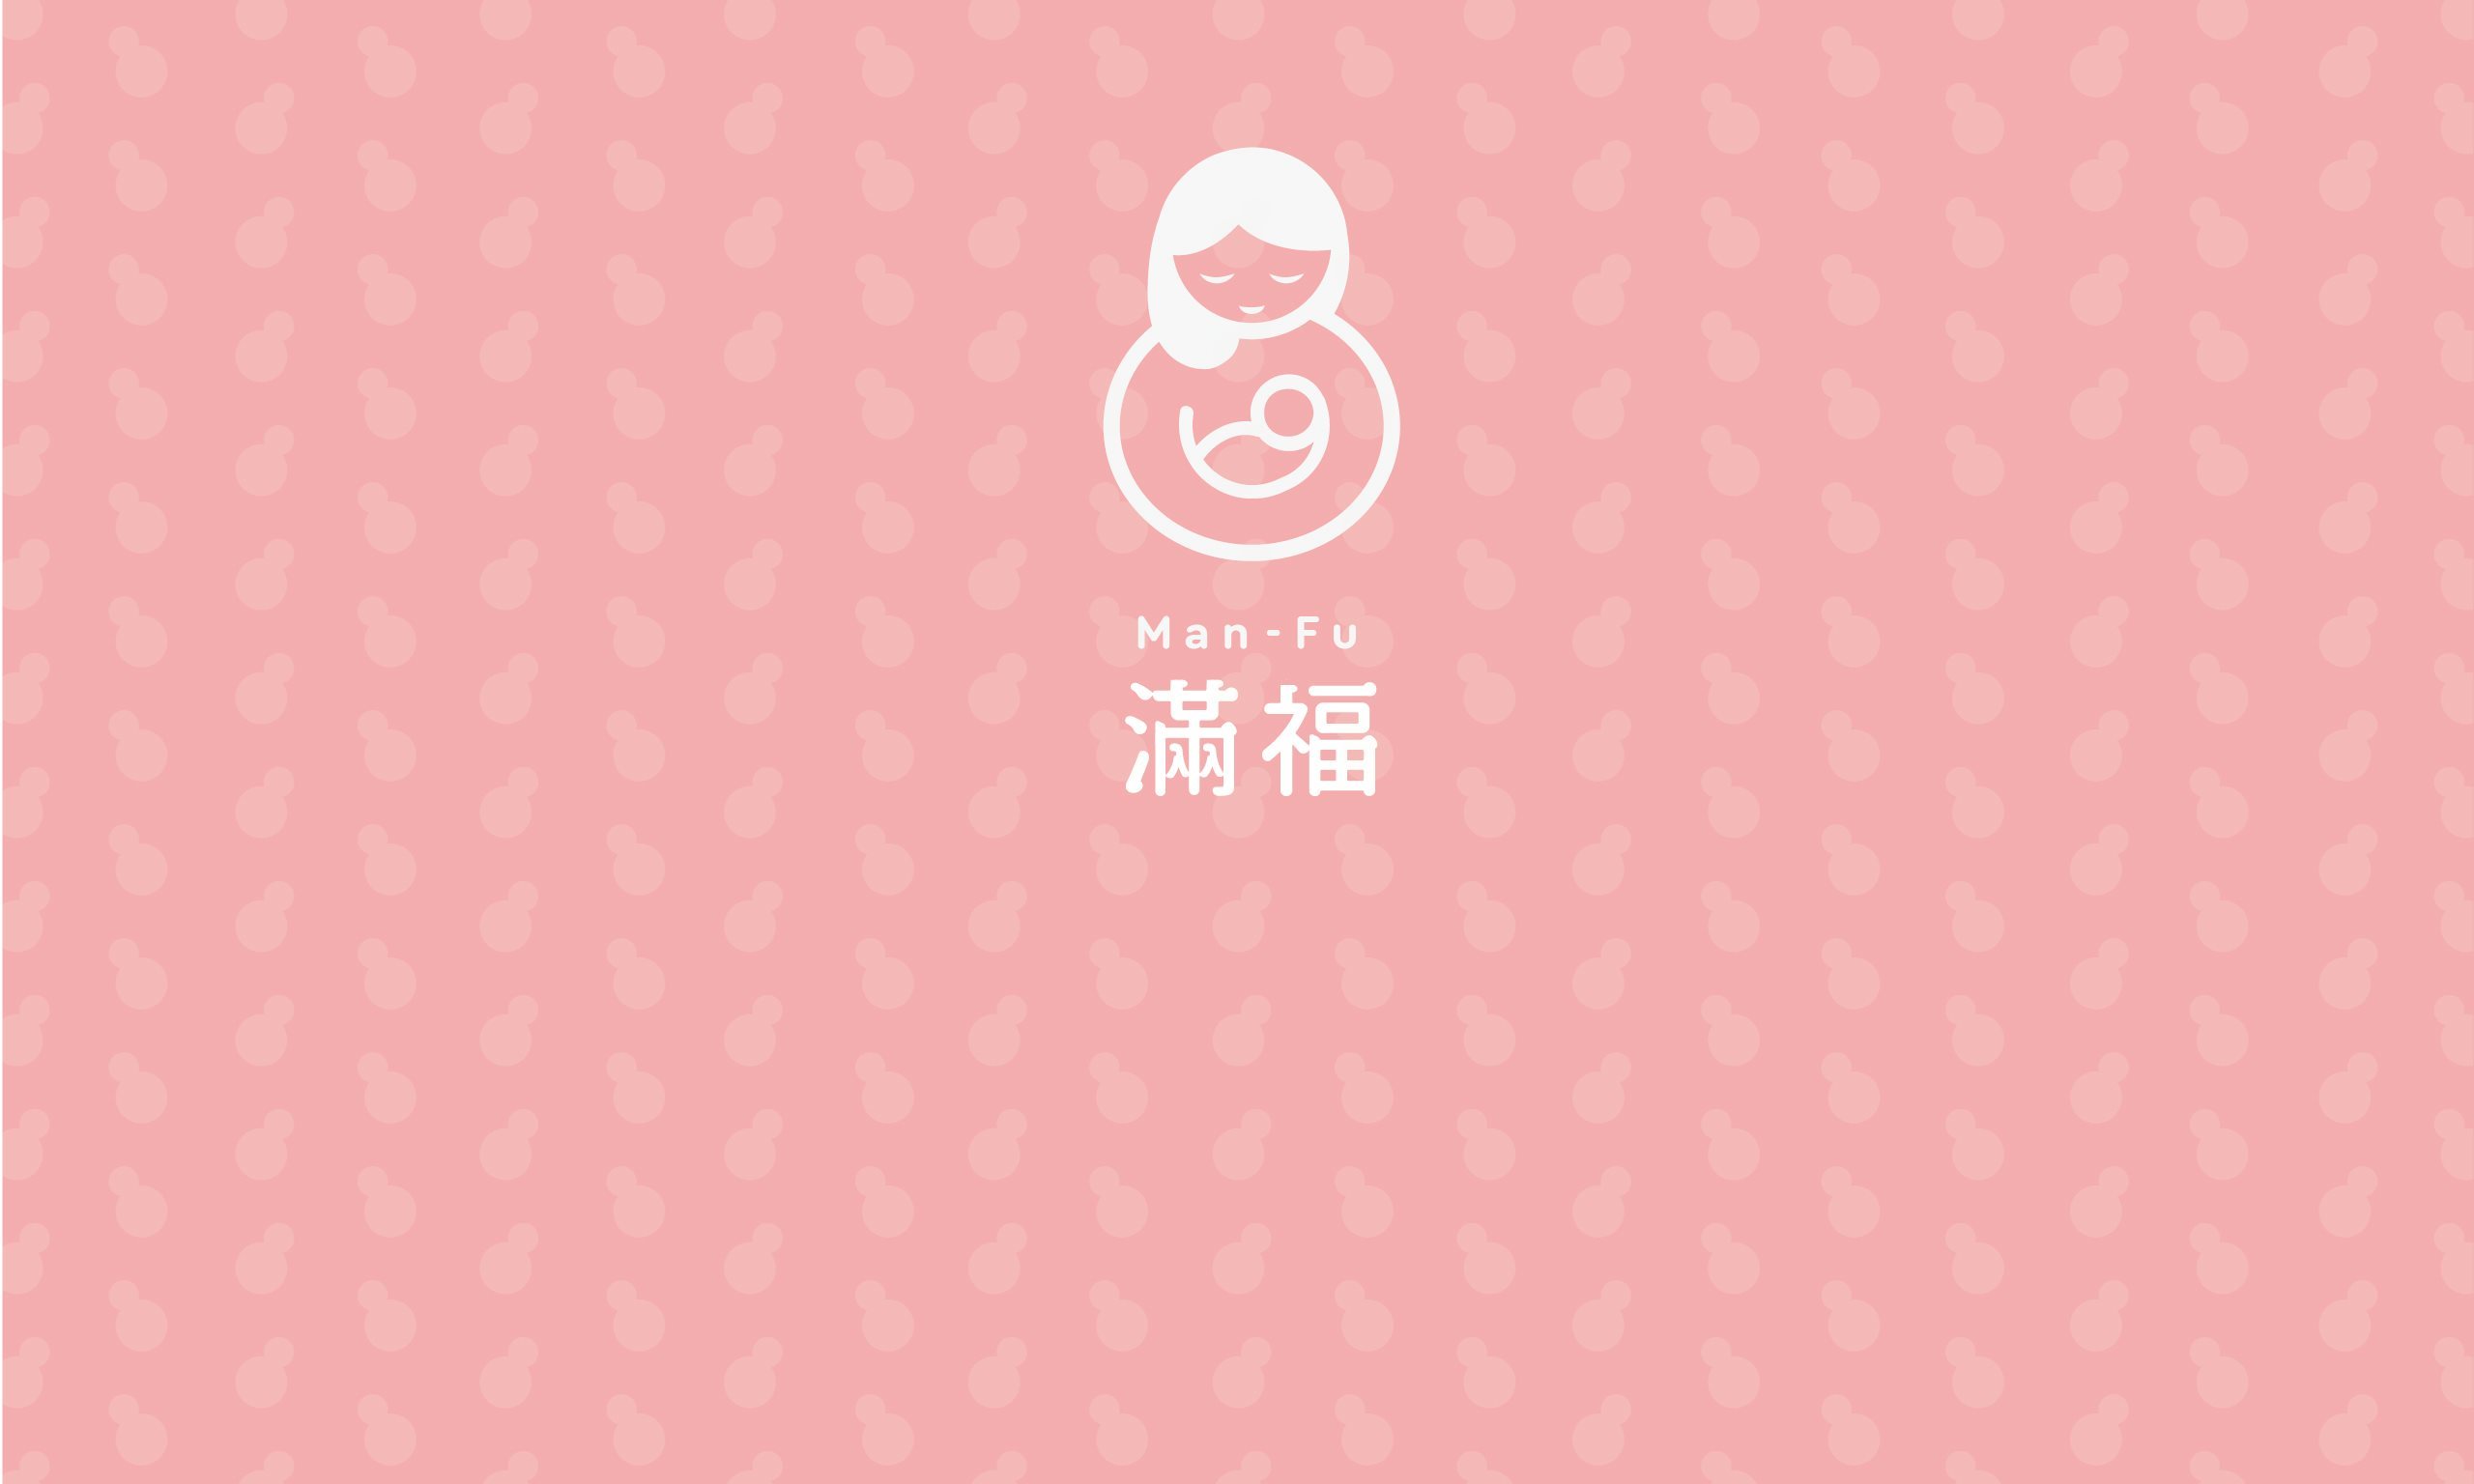 Man-Fu Postpartum Care Center - Taiwan brand design